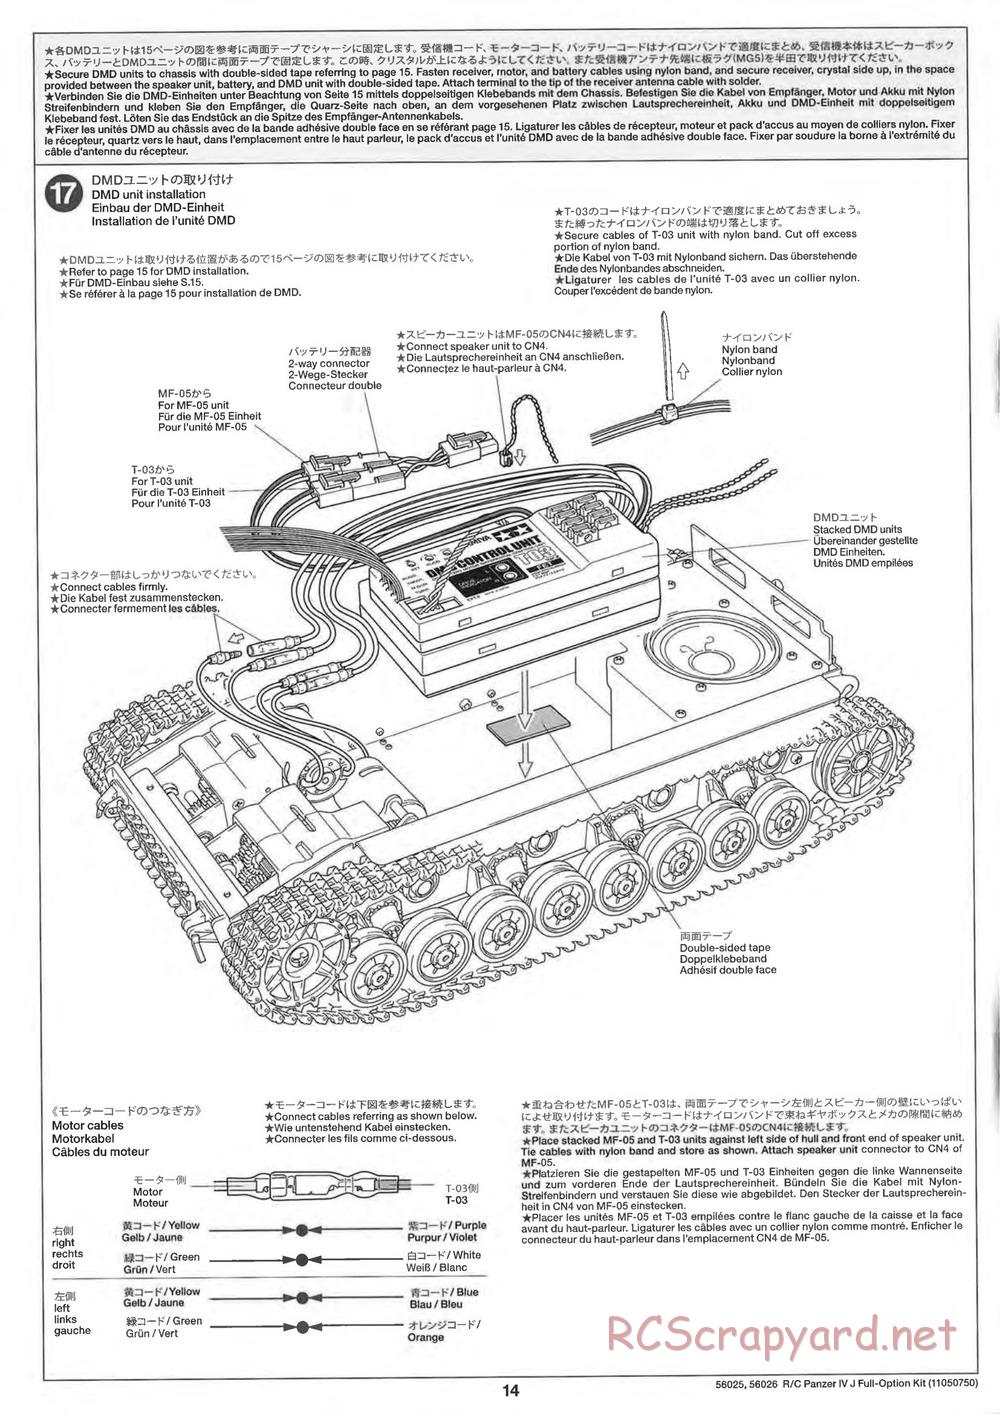 Tamiya - Panzerkampfwagen IV Ausf.J - 1/16 Scale Chassis - Manual - Page 14